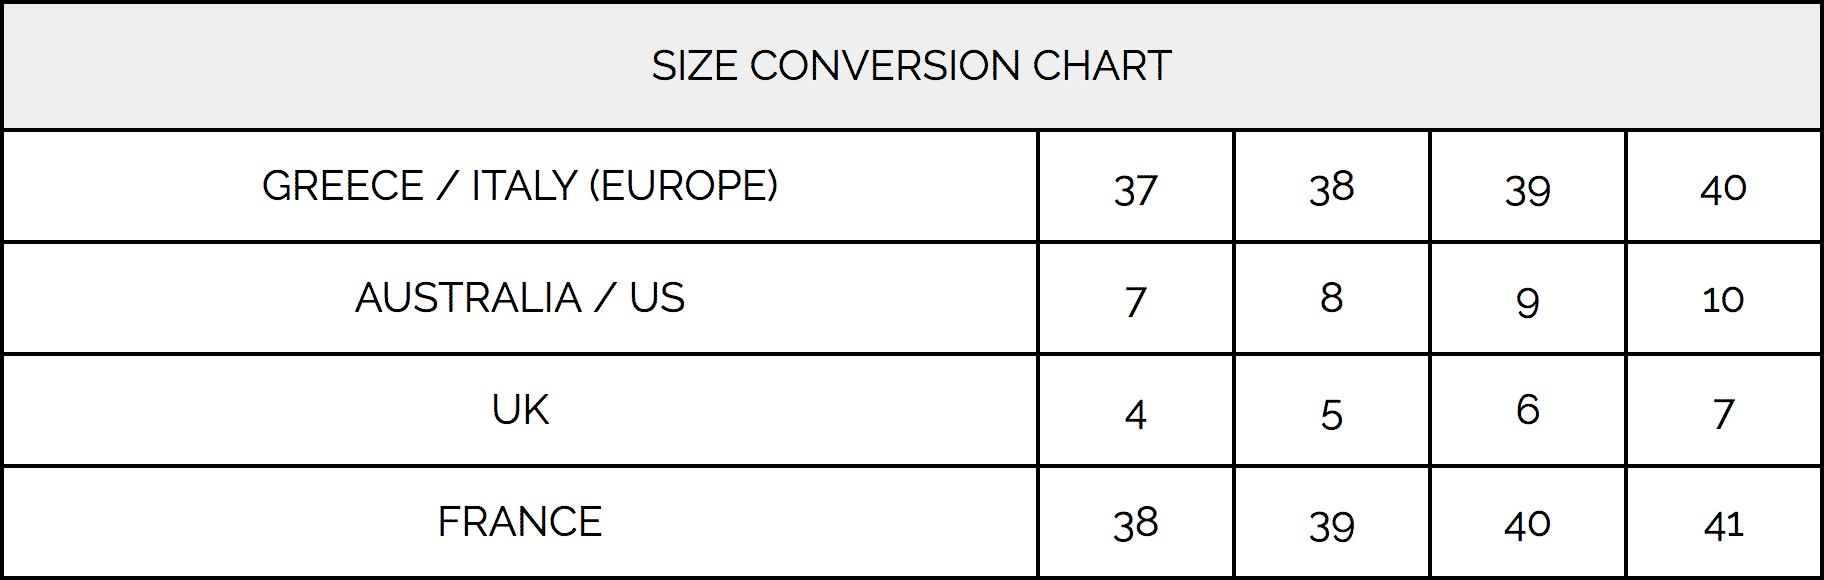 Italian Shoe Size Conversion Chart